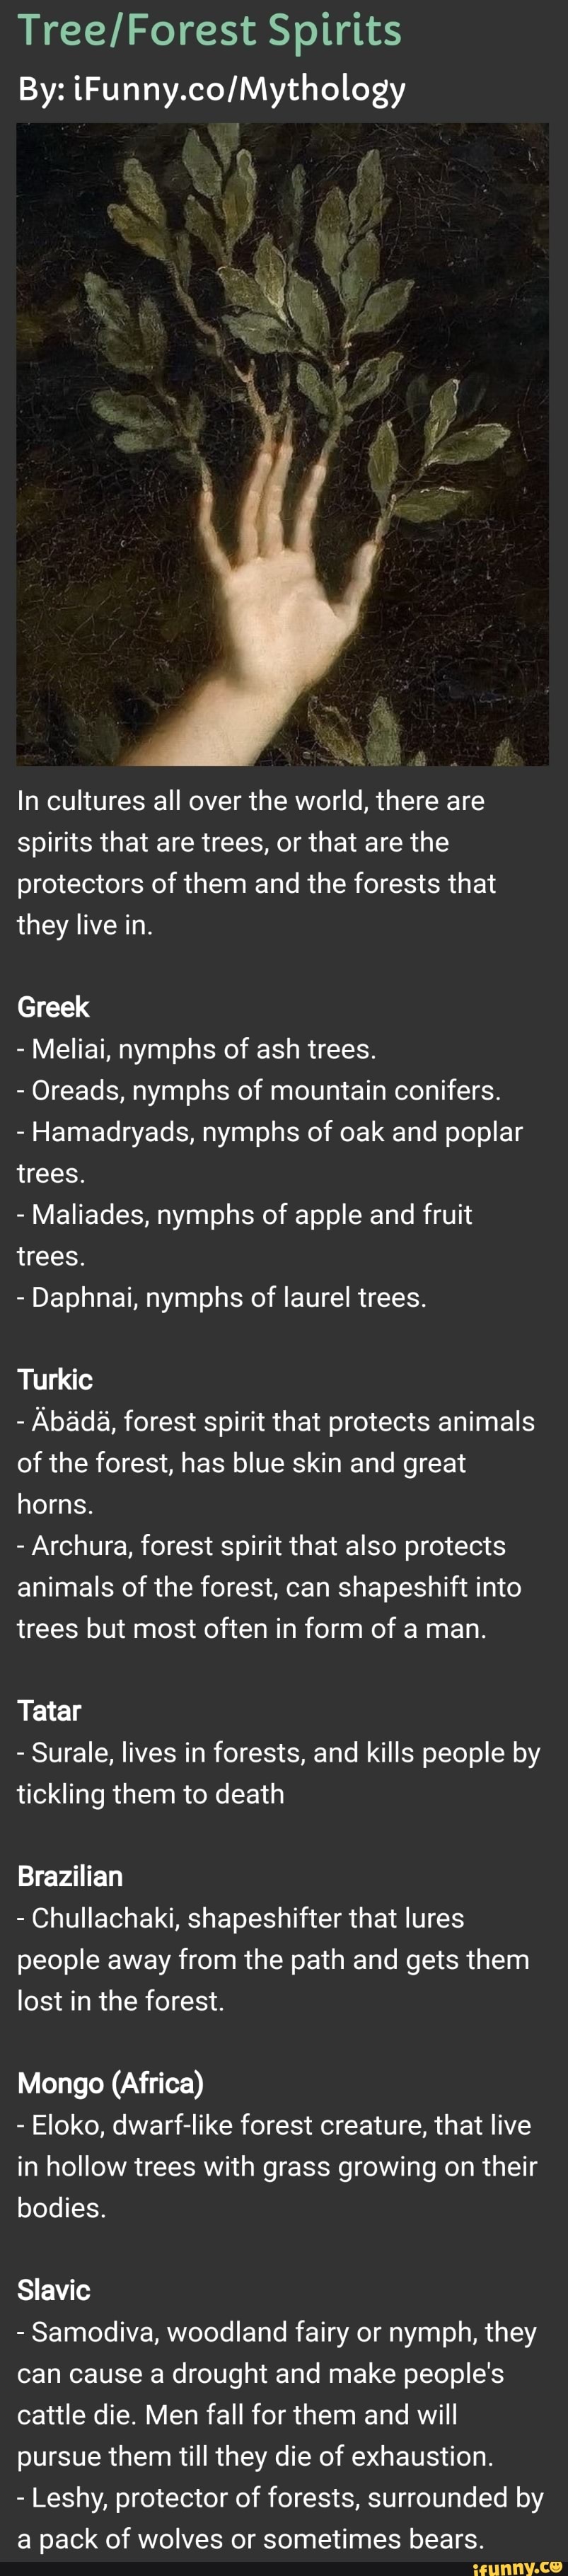 ash tree nymphs greek mythology